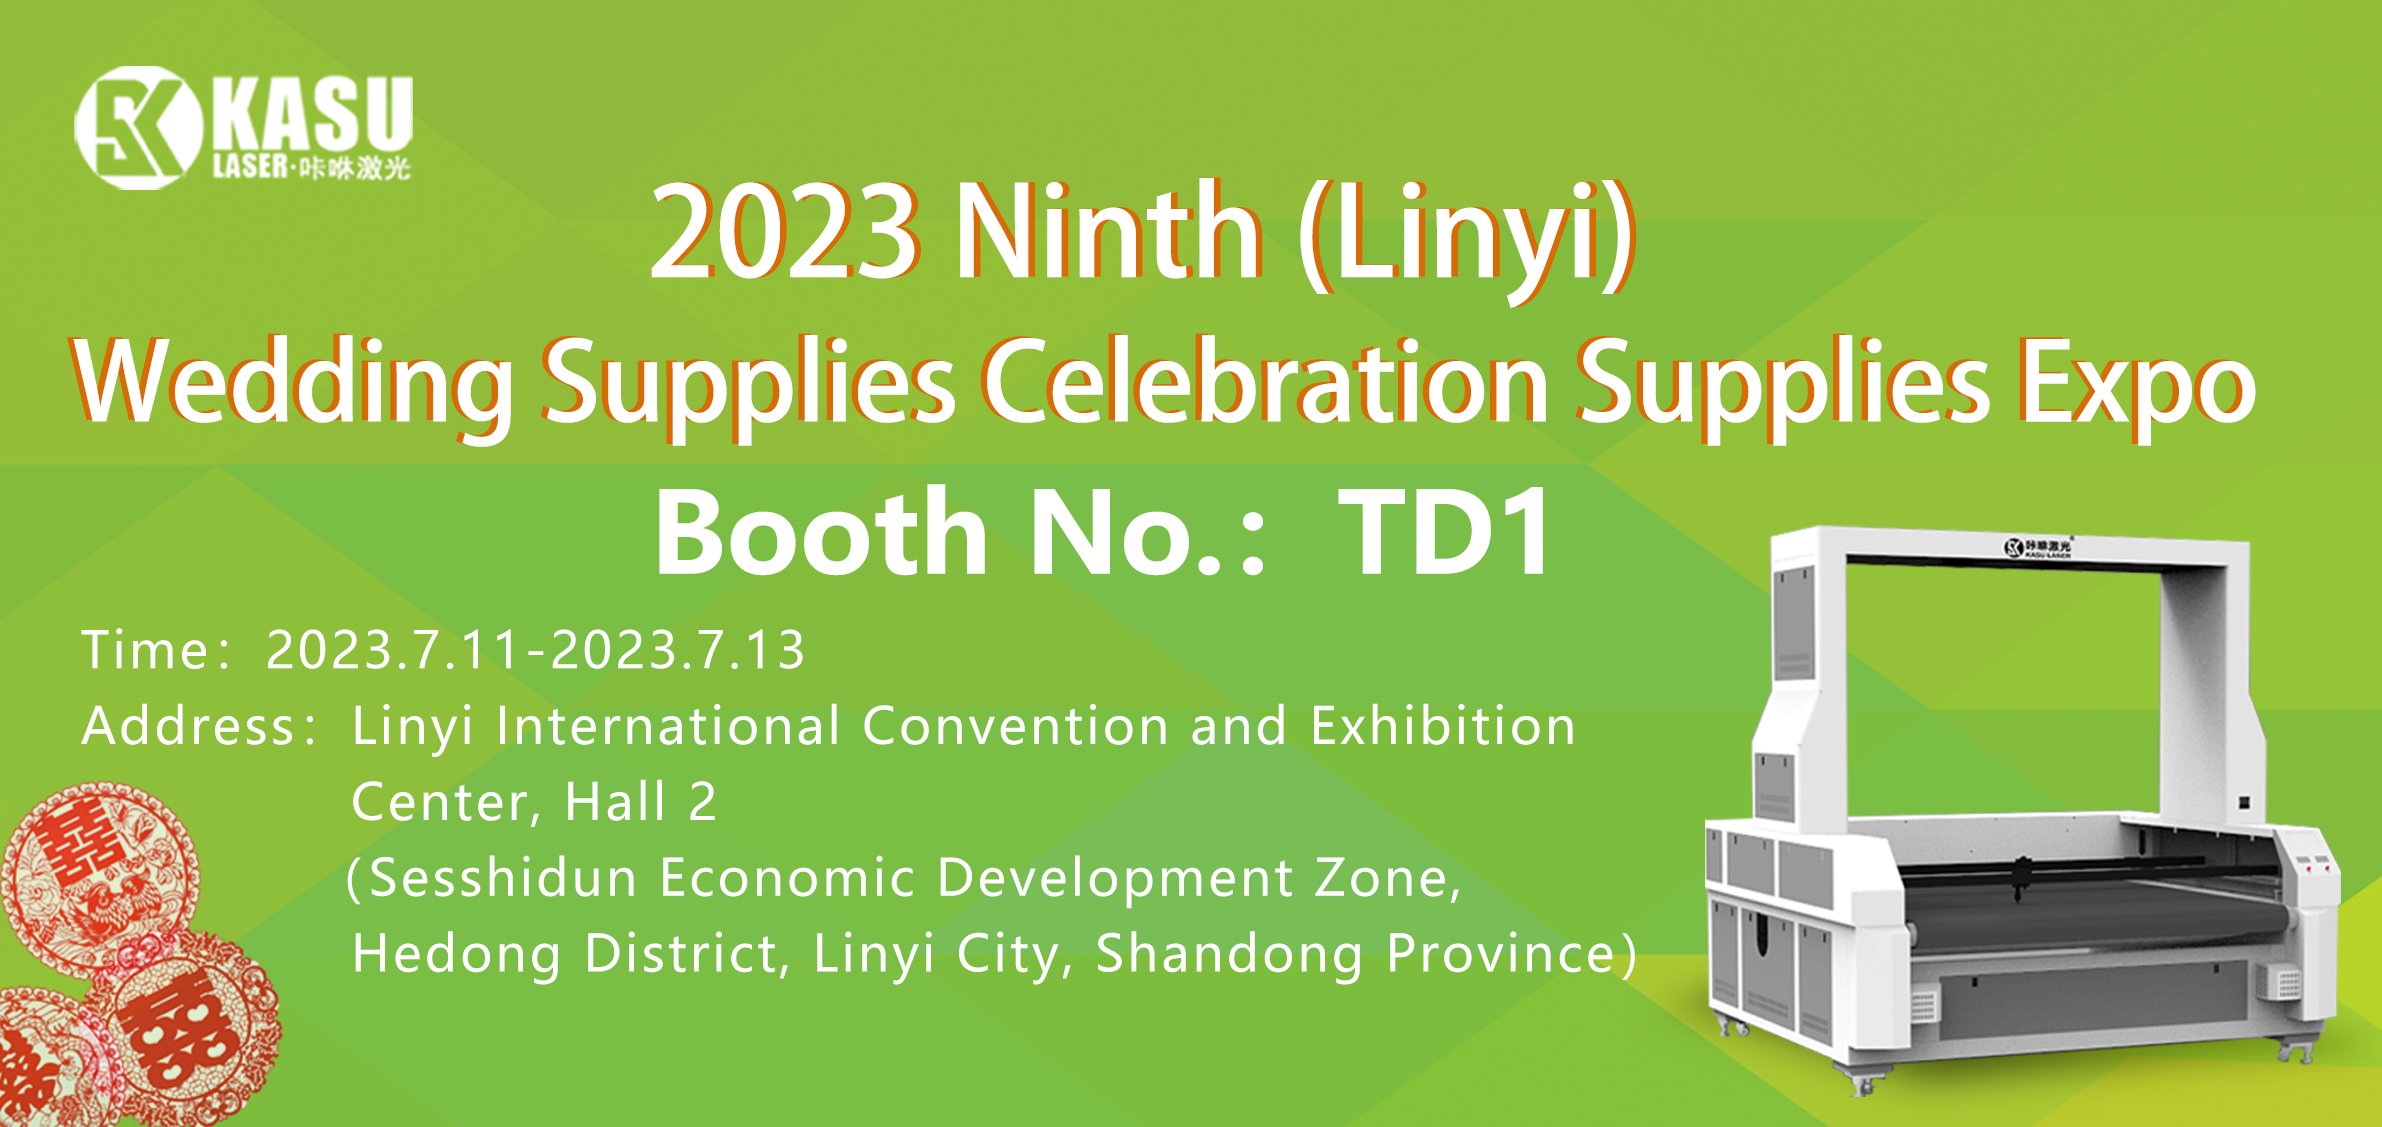 2023 Ninth (Linyi) Wedding Supplies Celebration Supplies Expo